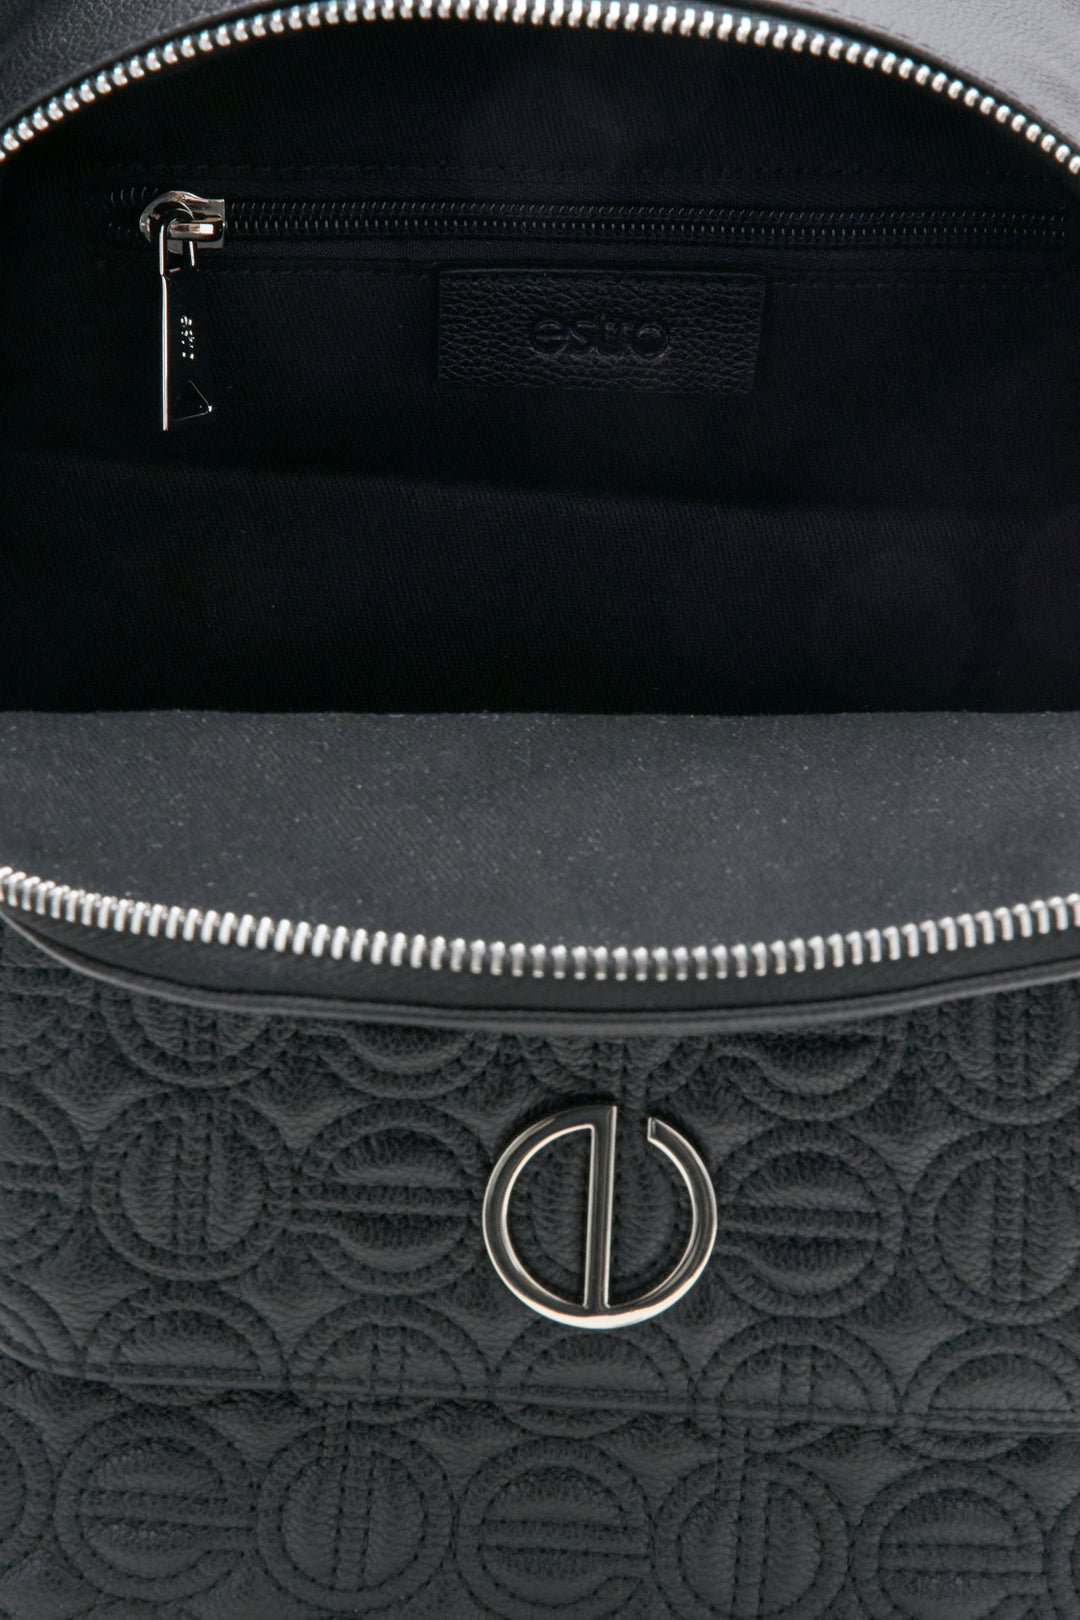 Black Estro women's backpack - close-up on the internal pocket.